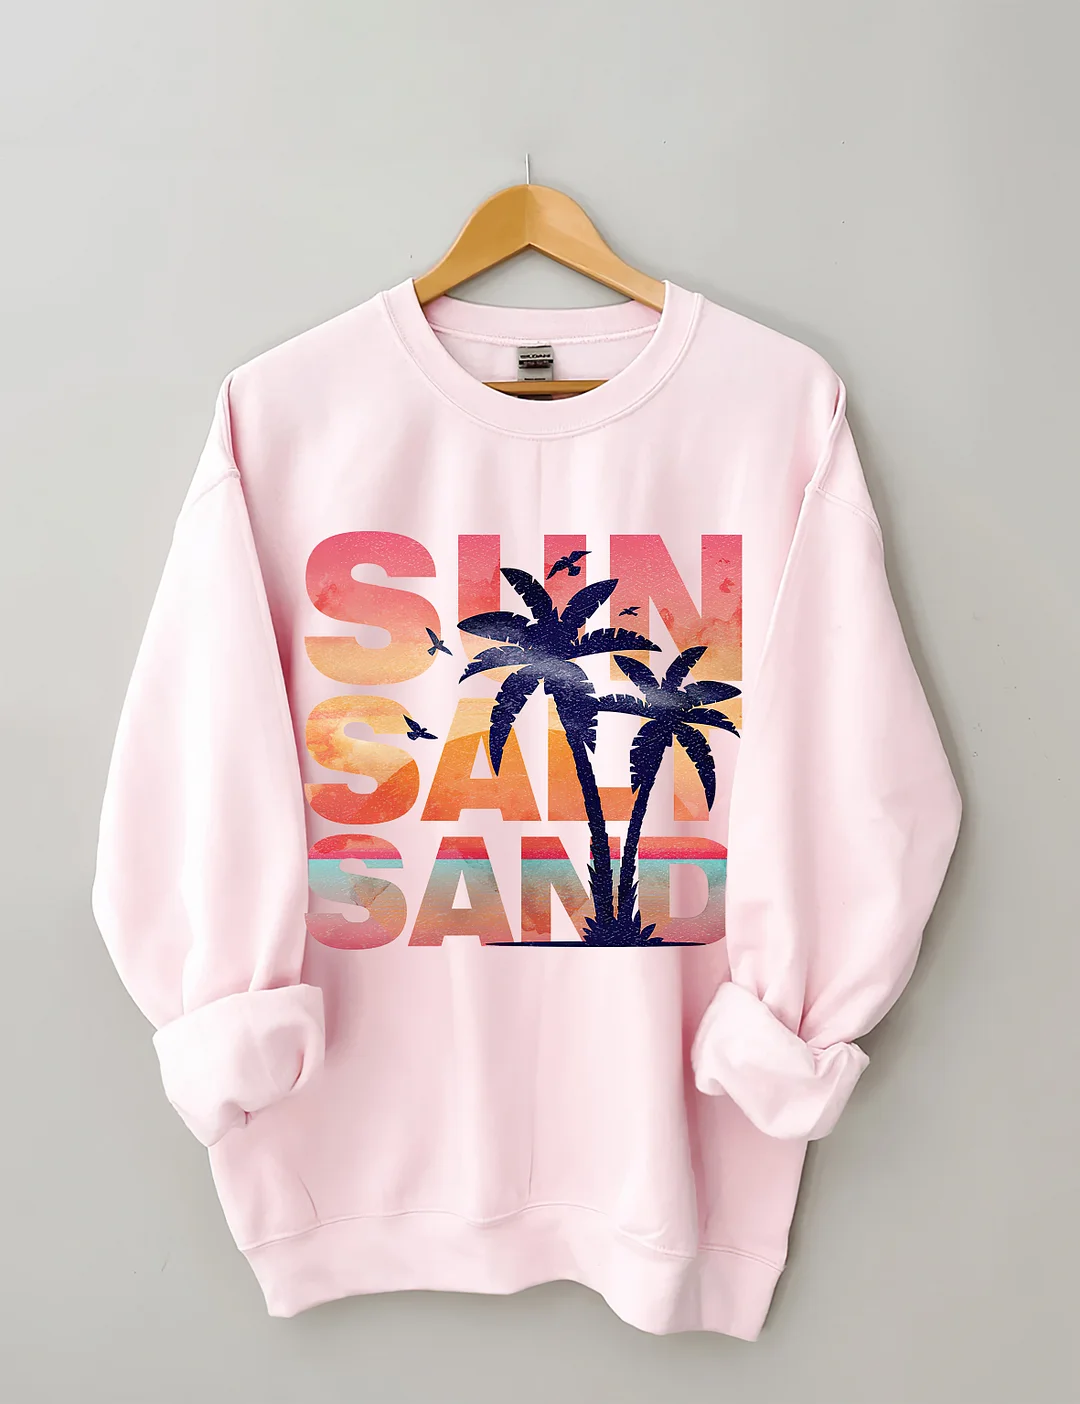 Sun Salt Sand Sweatshirt